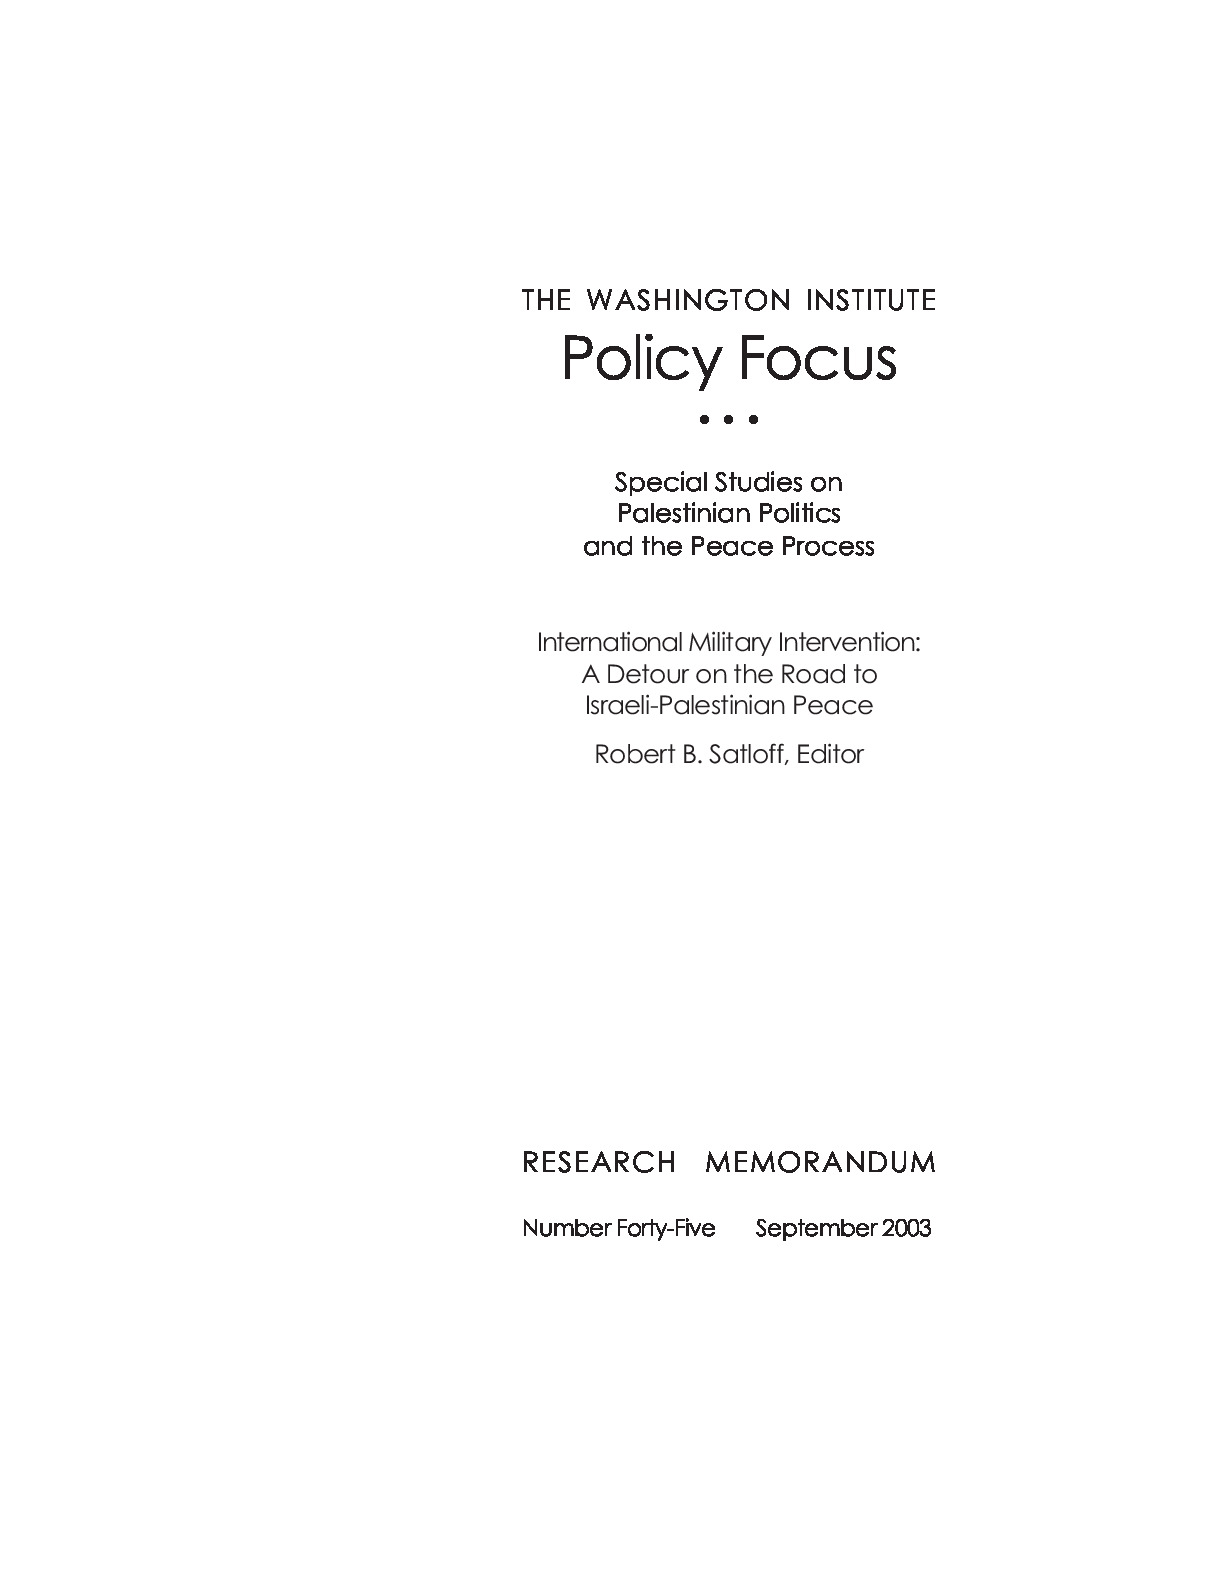 PolicyFocus45.pdf